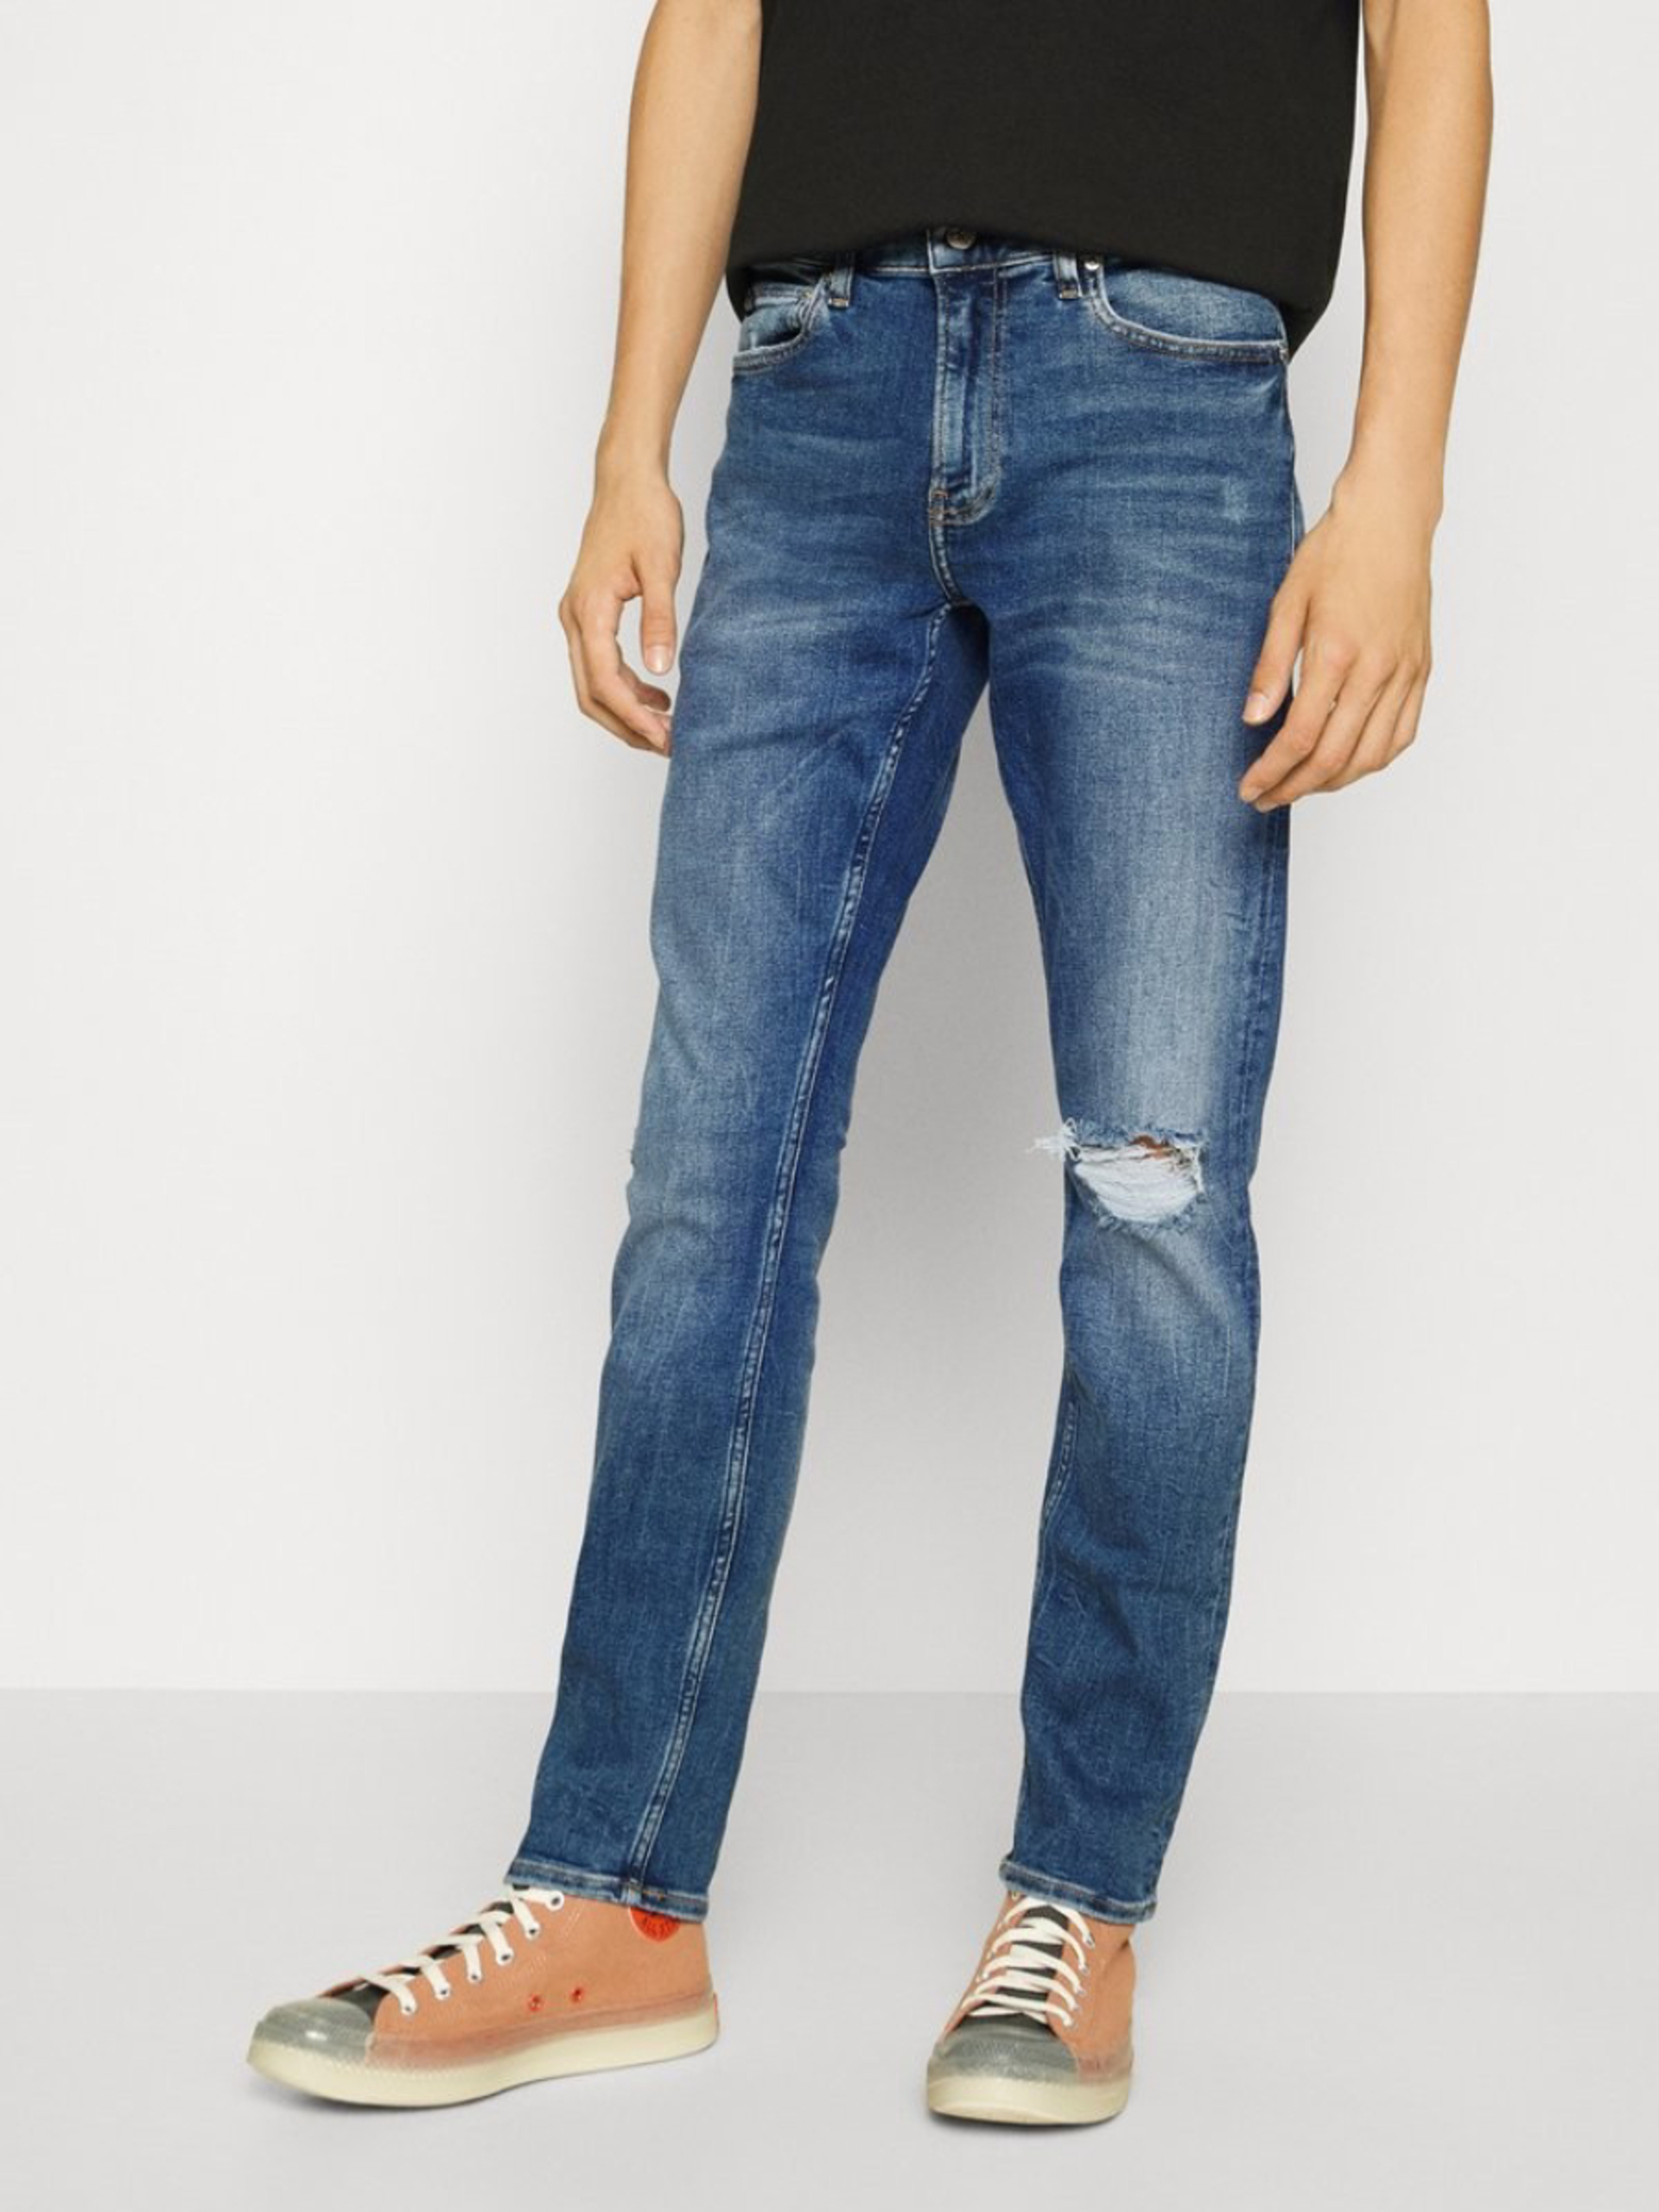 Calvin Klein pánské modré džíny SLIM - 34/34 (1BJ)